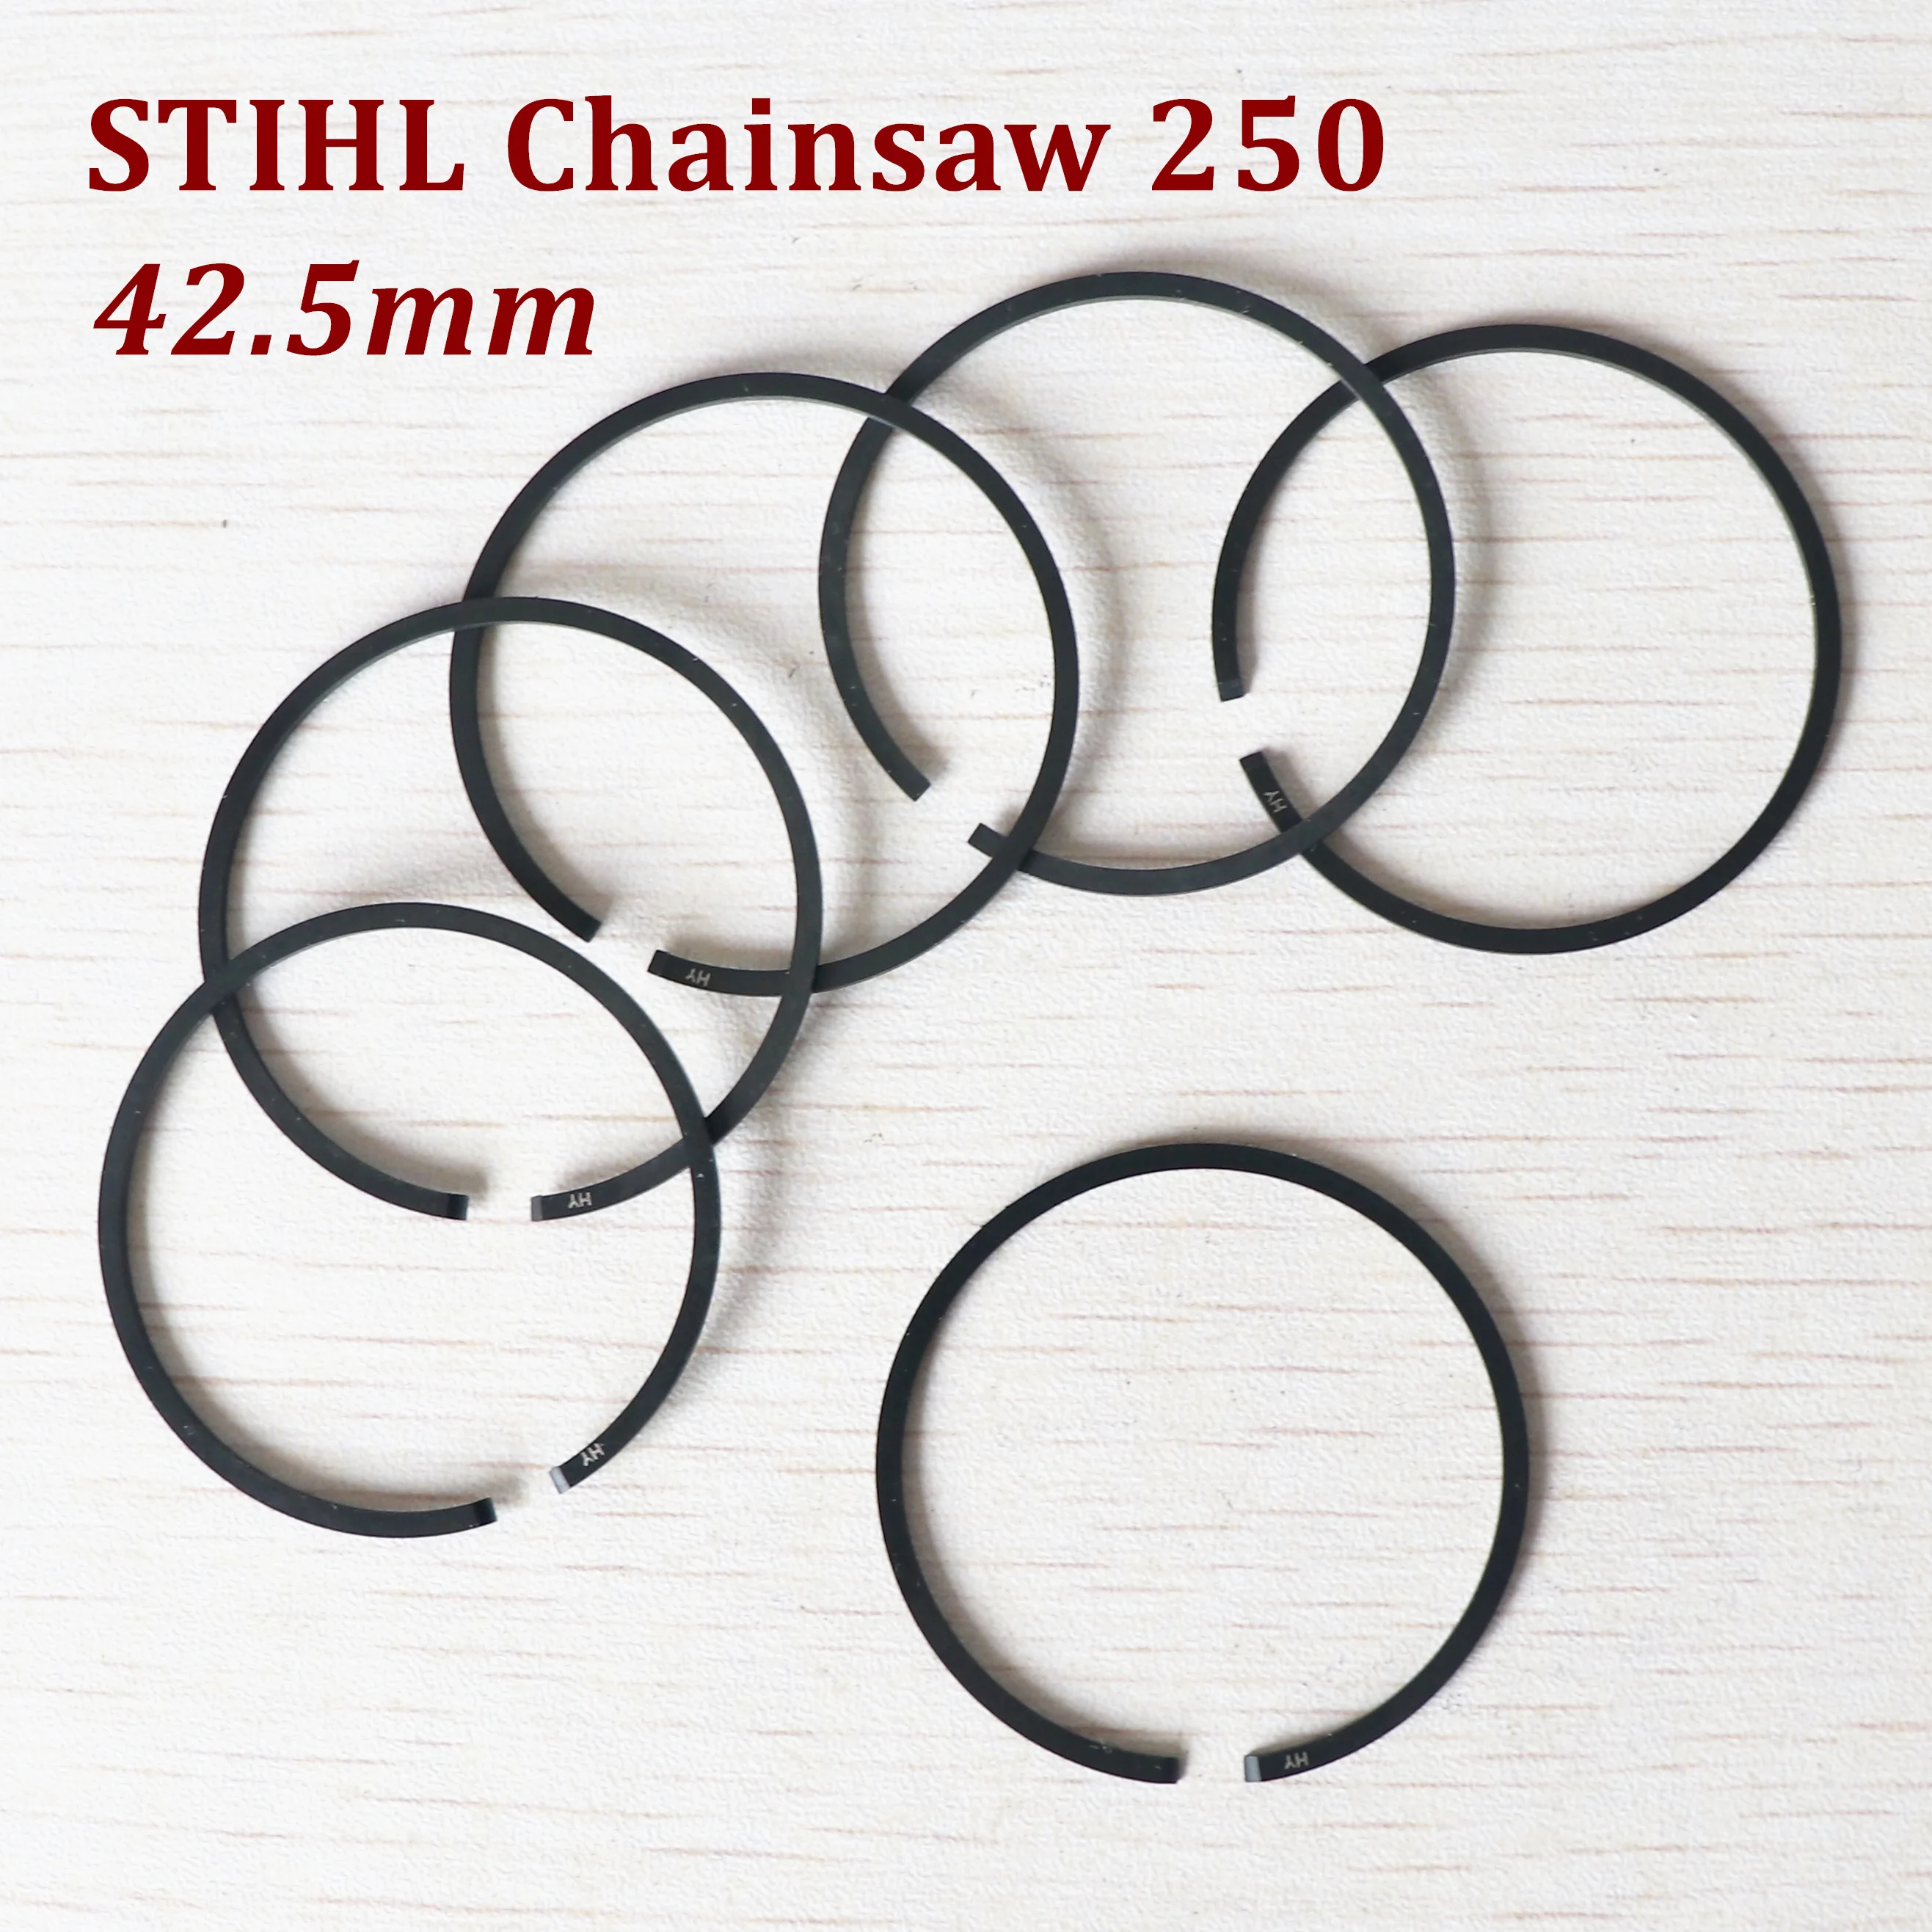 6 шт. диаметр поршневых колец 42,5 мм для замены бензопилы stihl 250